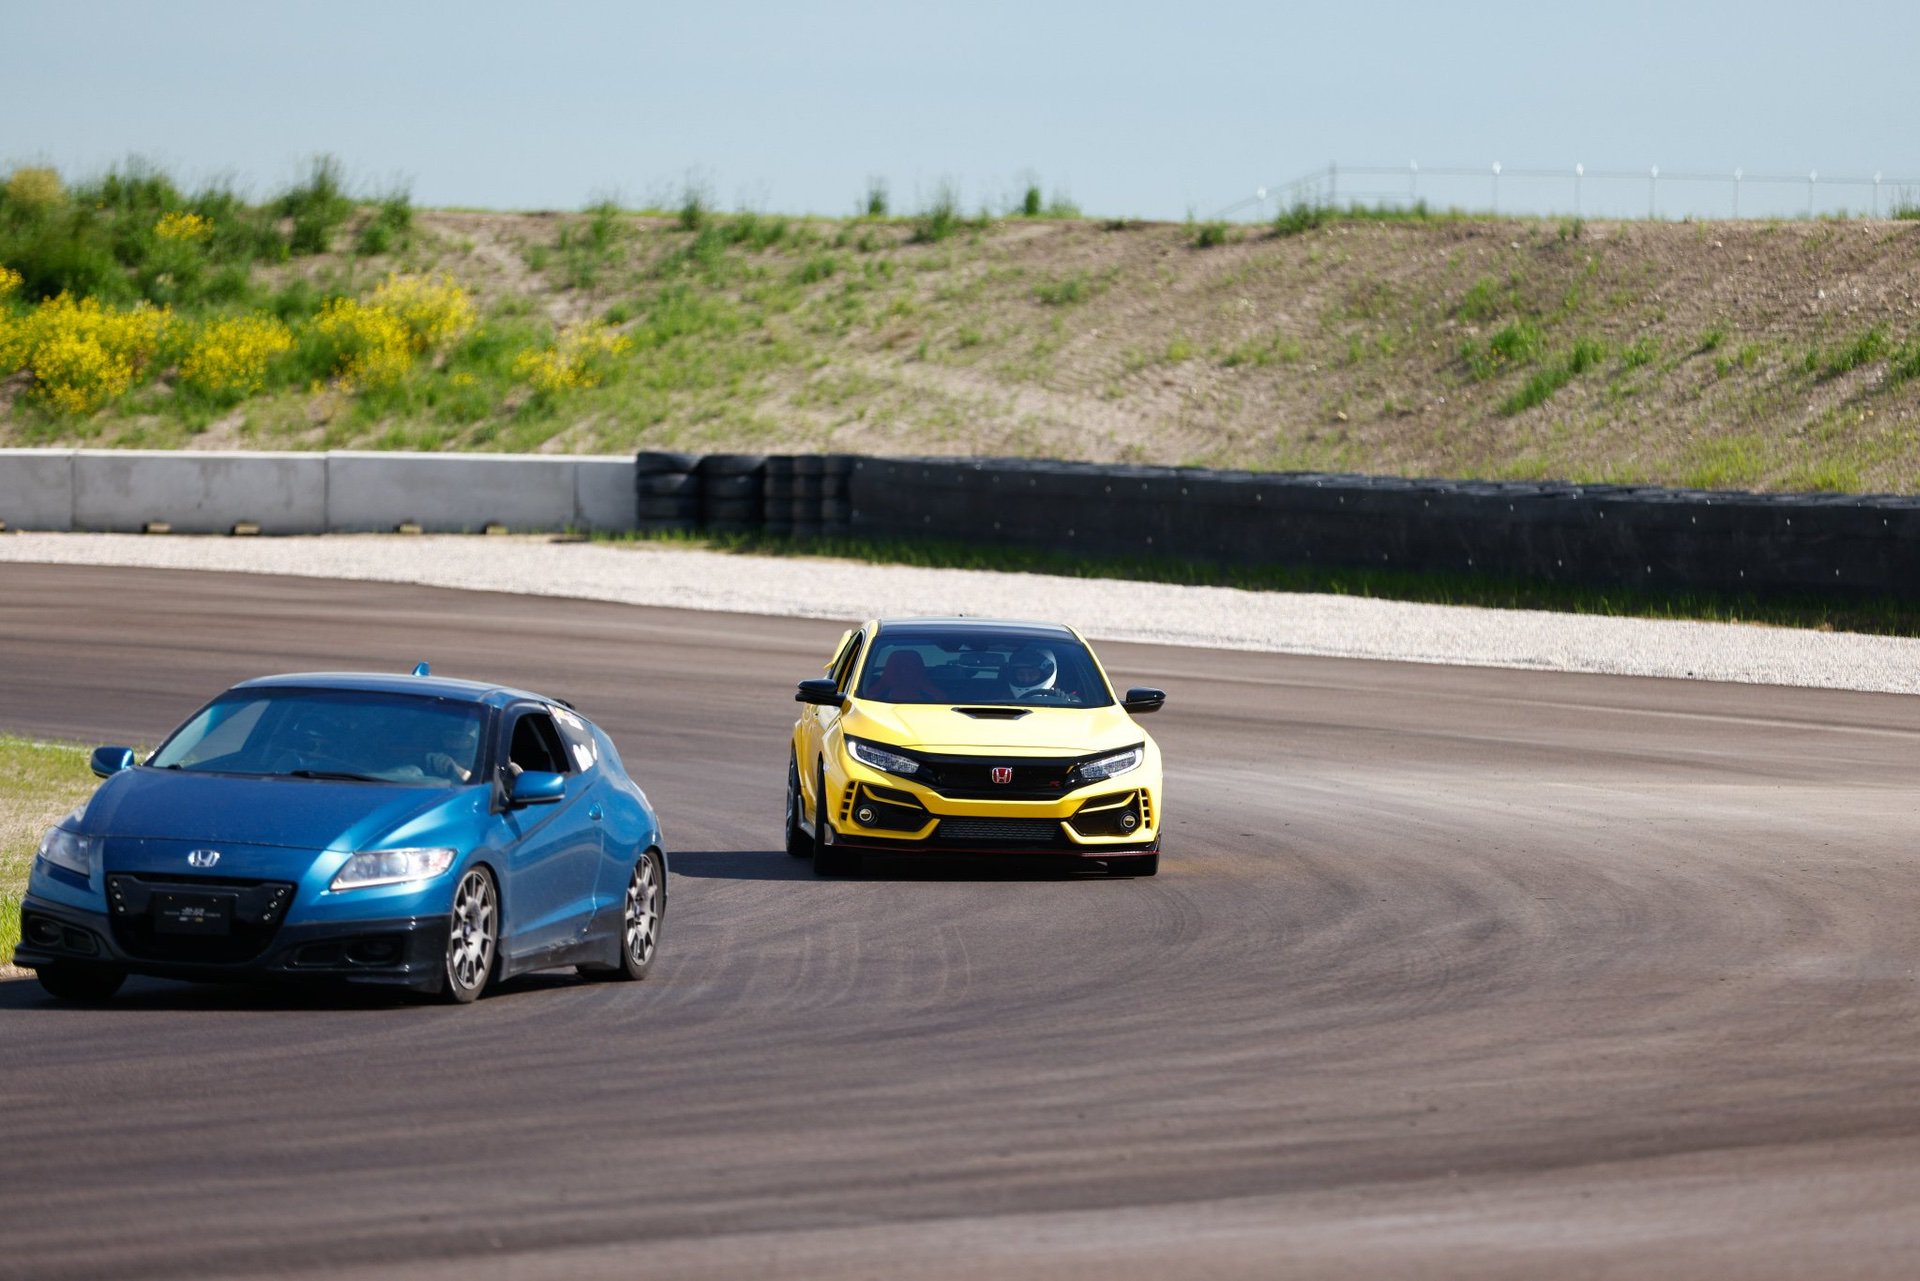 Two Hondas racing around a track